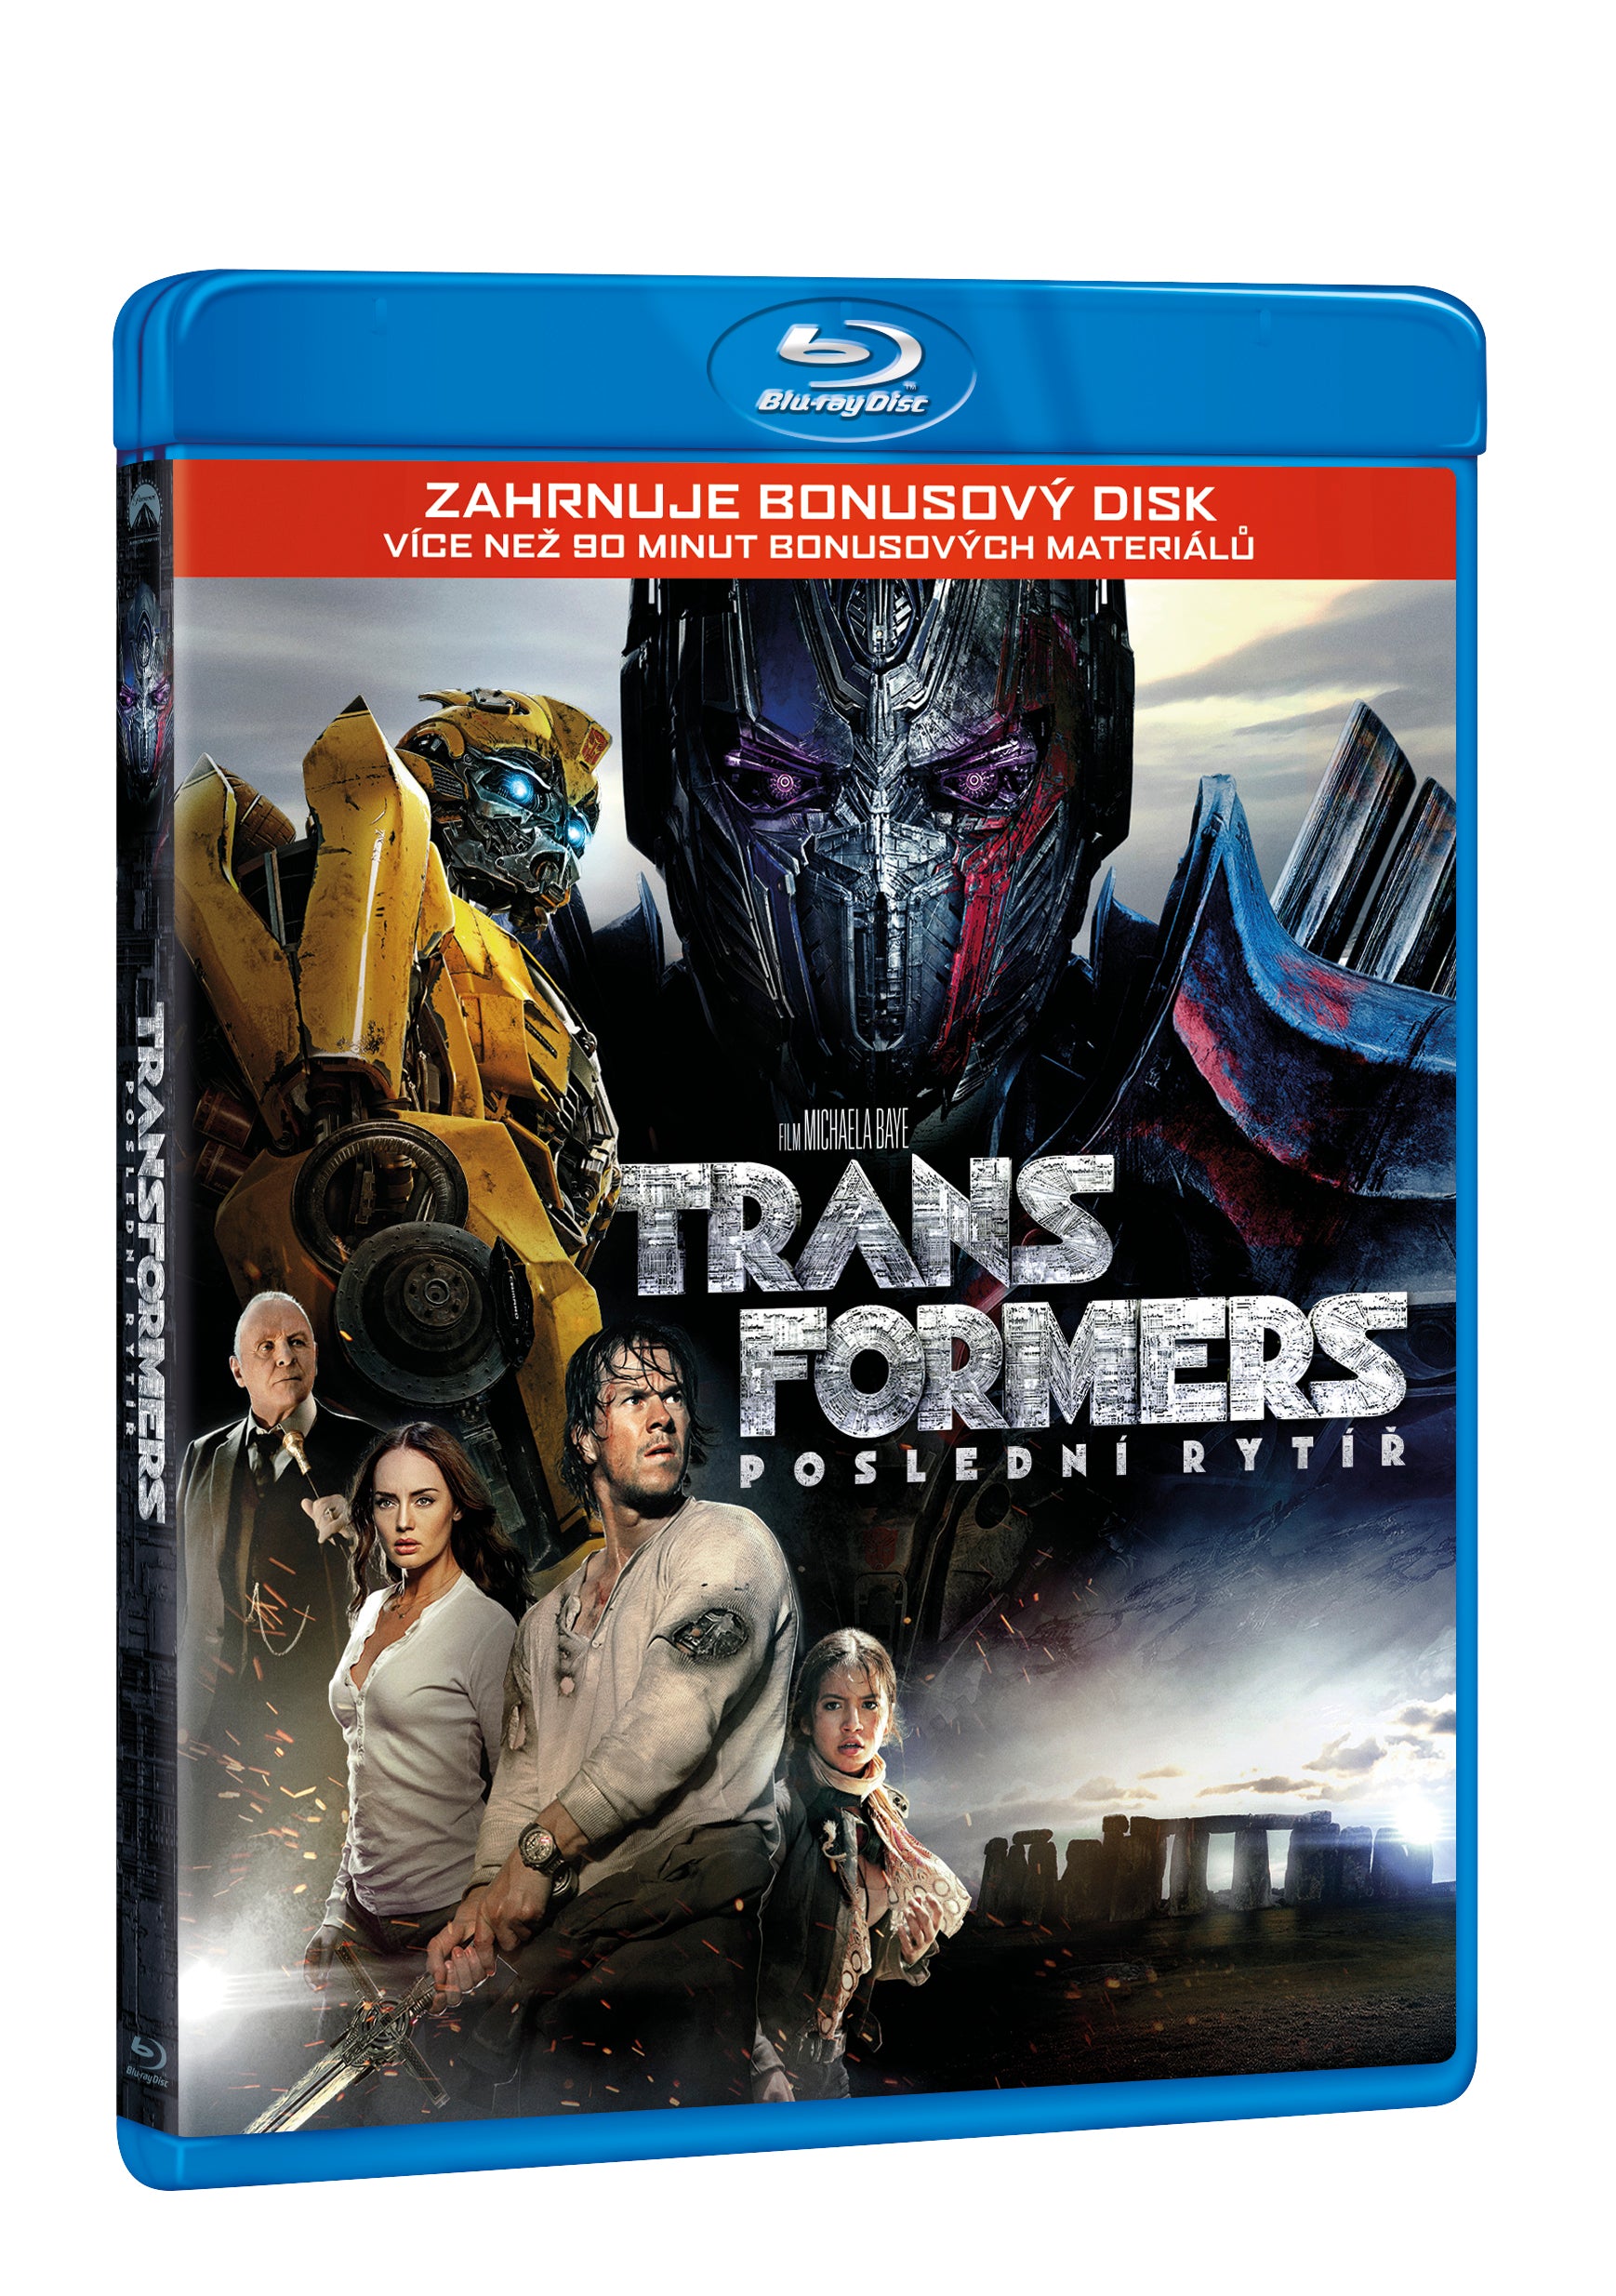 Transformers: Posledni rytir 2BD (BD+bonus disk) / Transformers: The Last Knight - Czech version